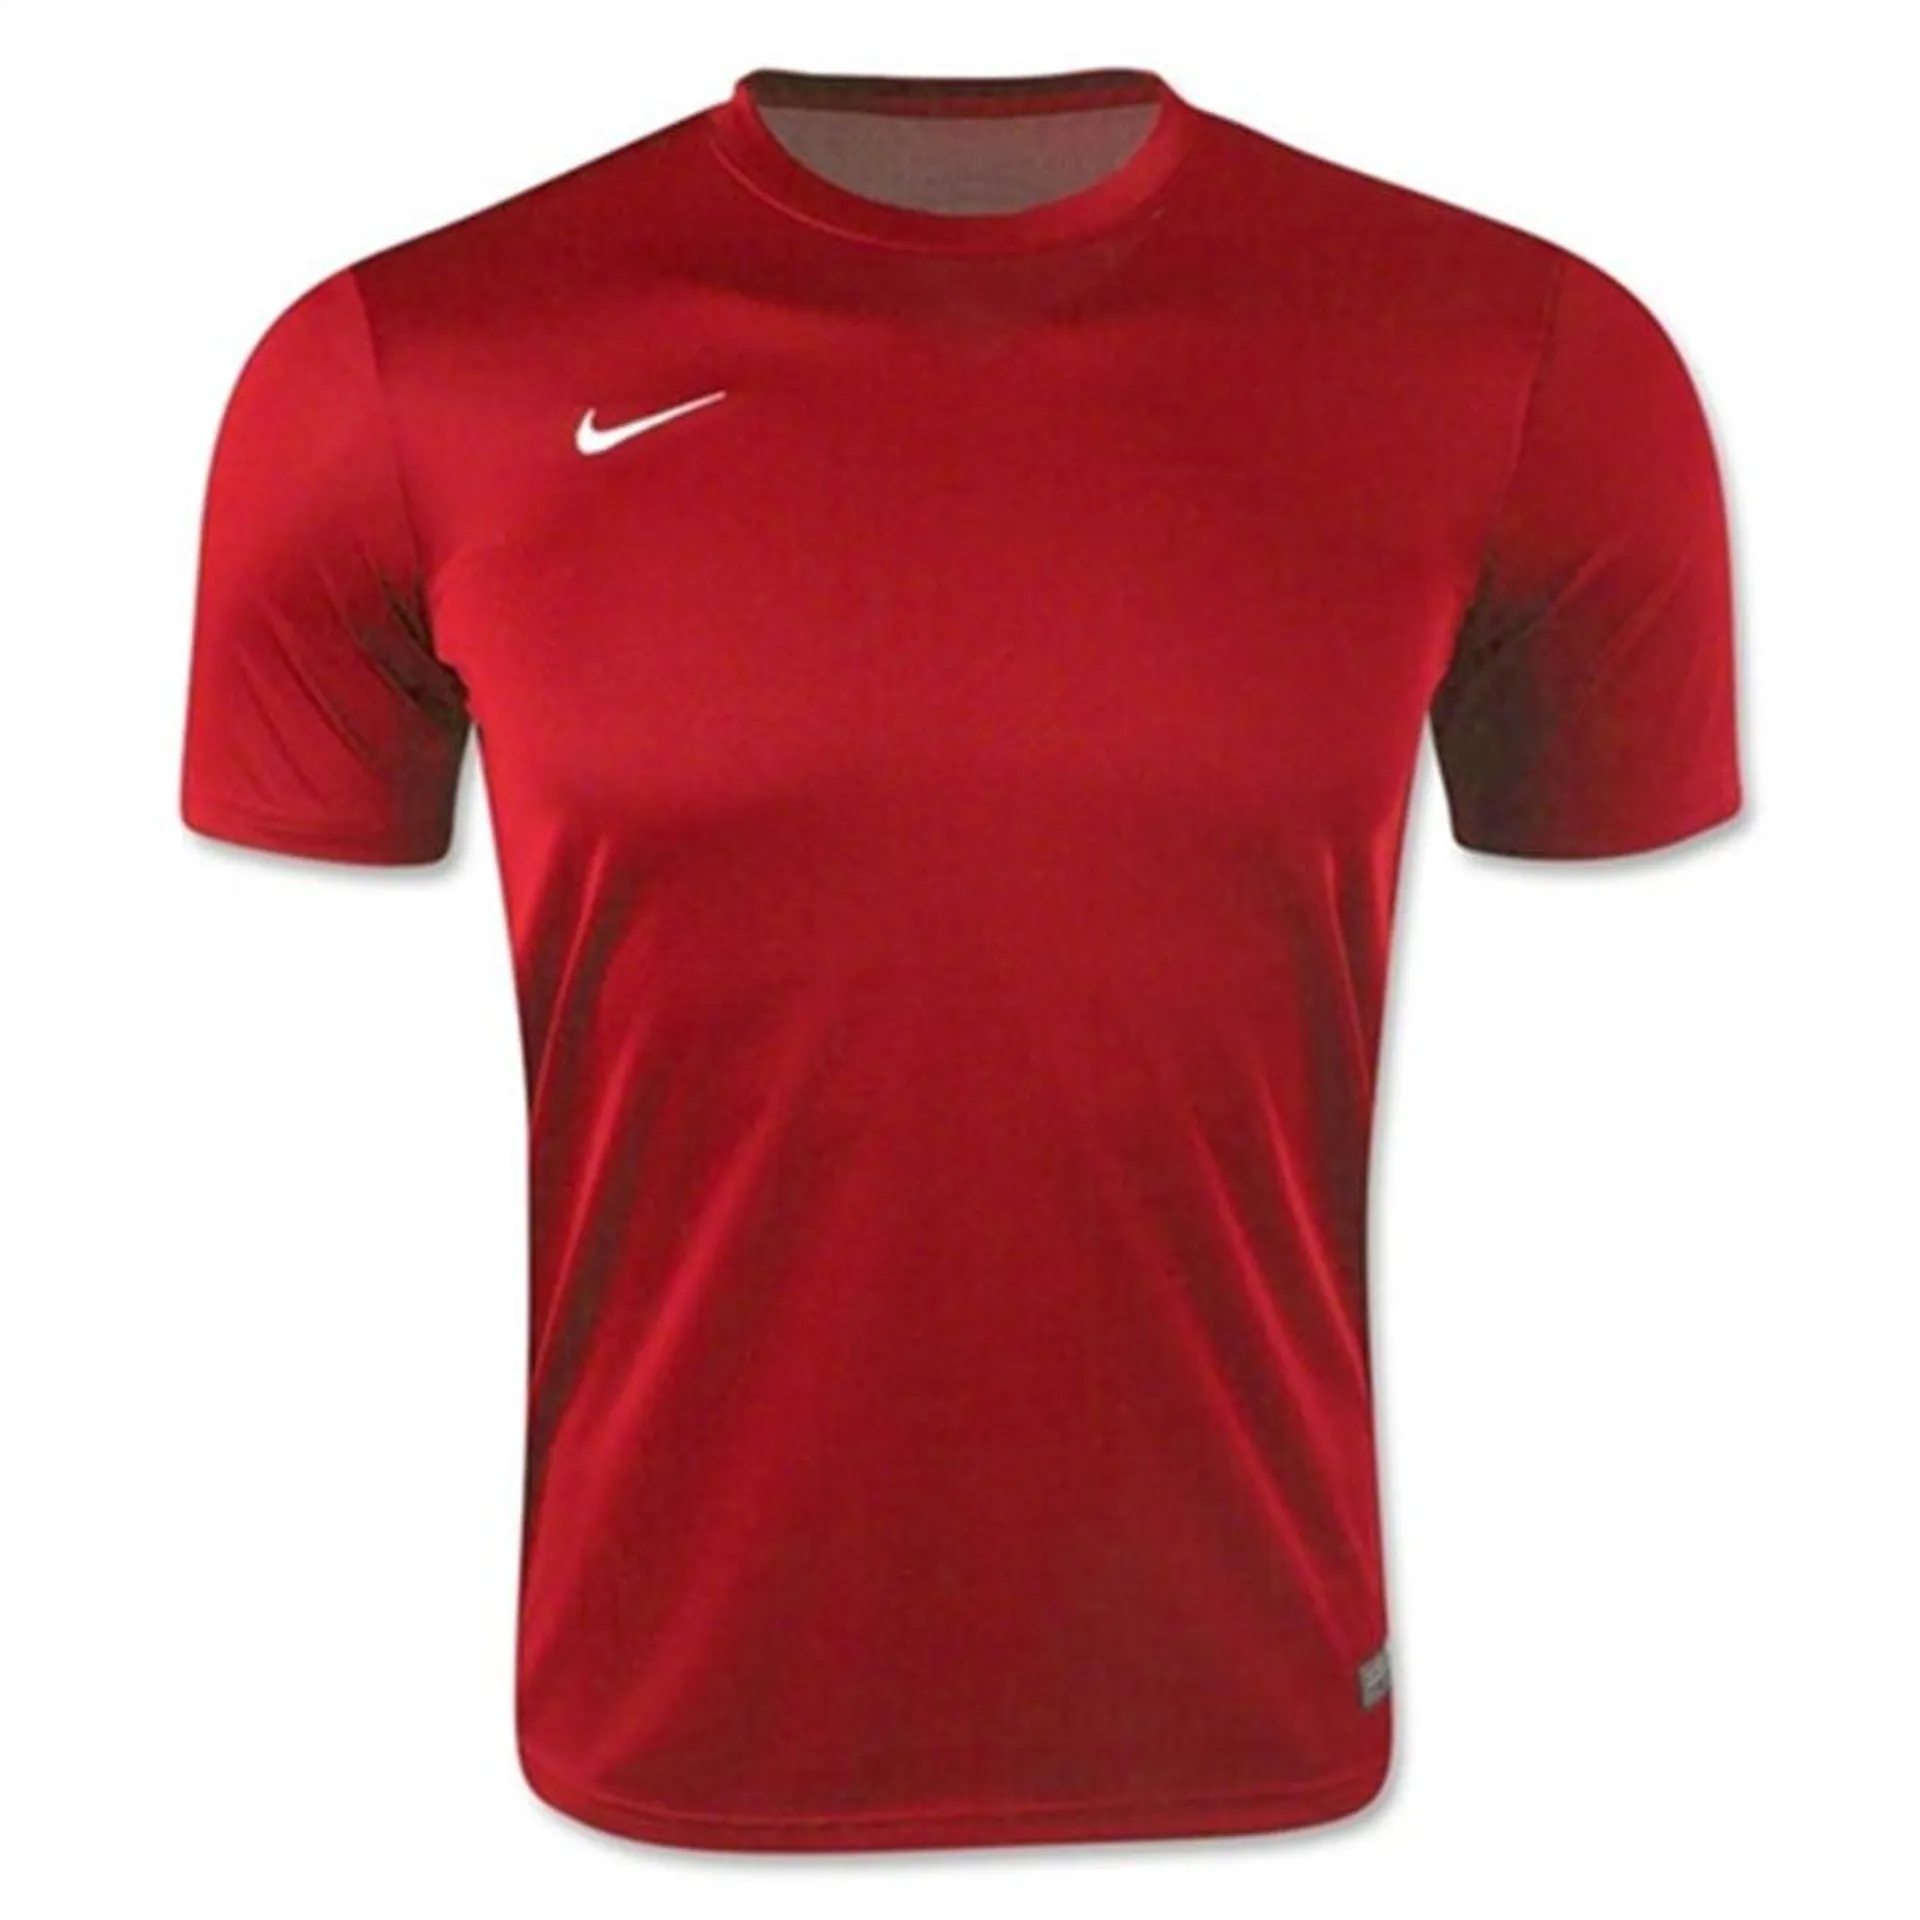 Nike Boys Tiempo II Soccer Jersey T-Shirt Red